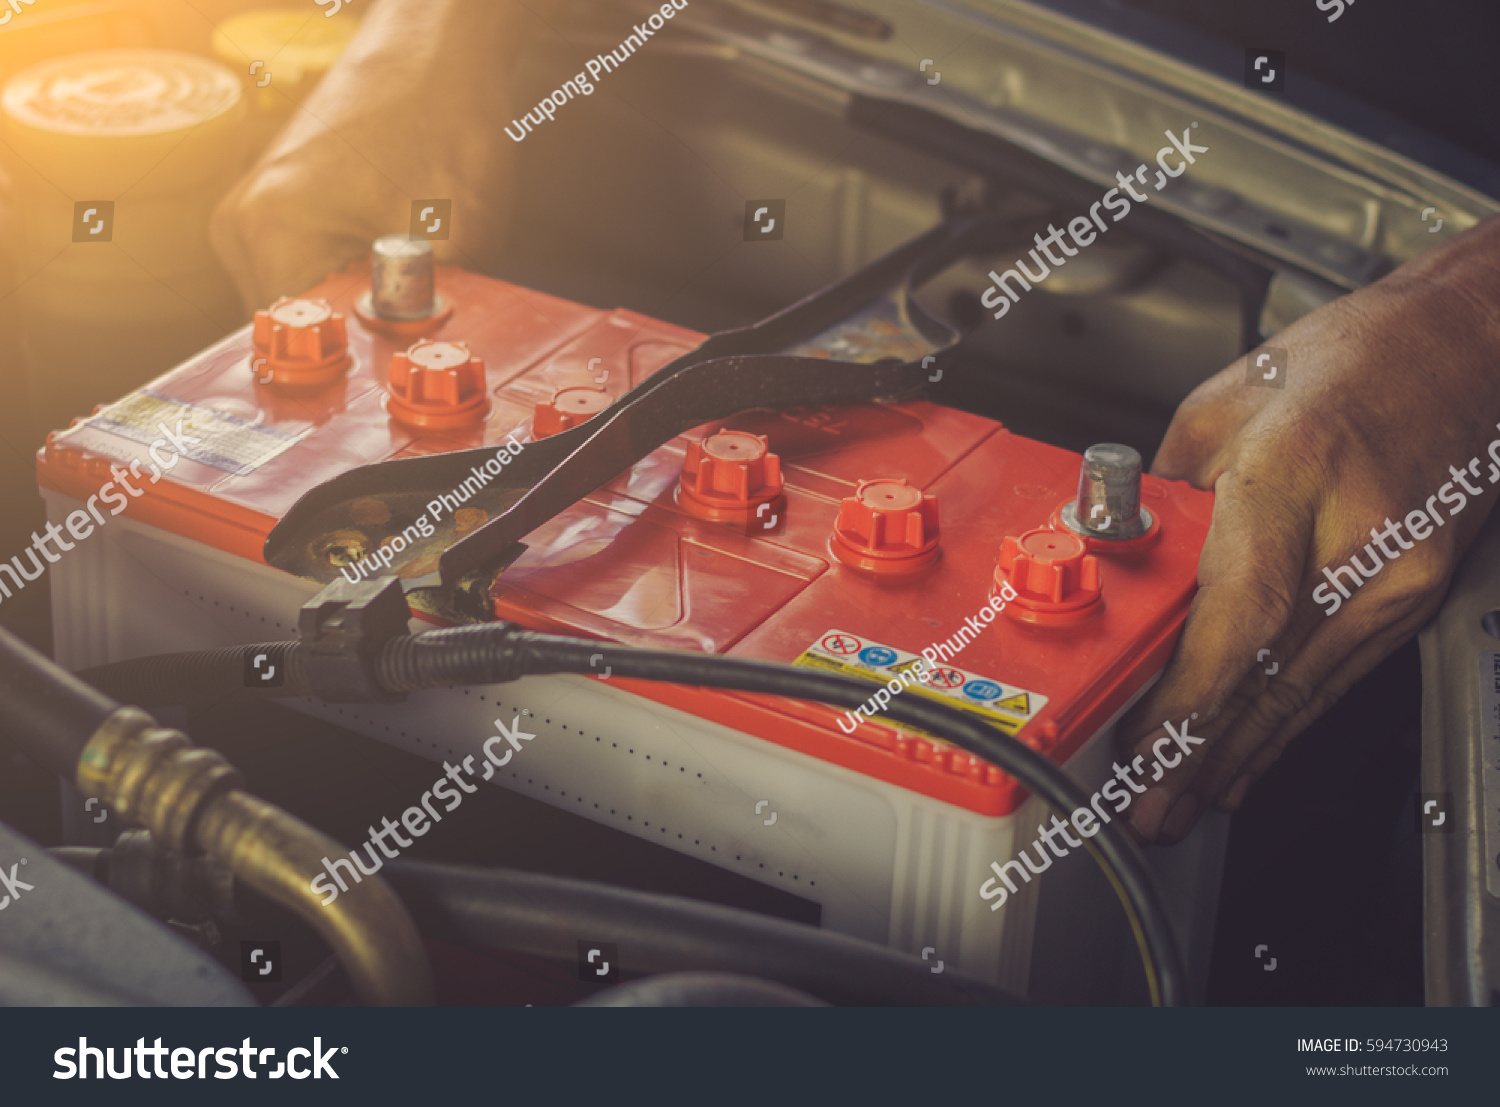 A car mechanic replaces a battery / soft focus picture  #594730943